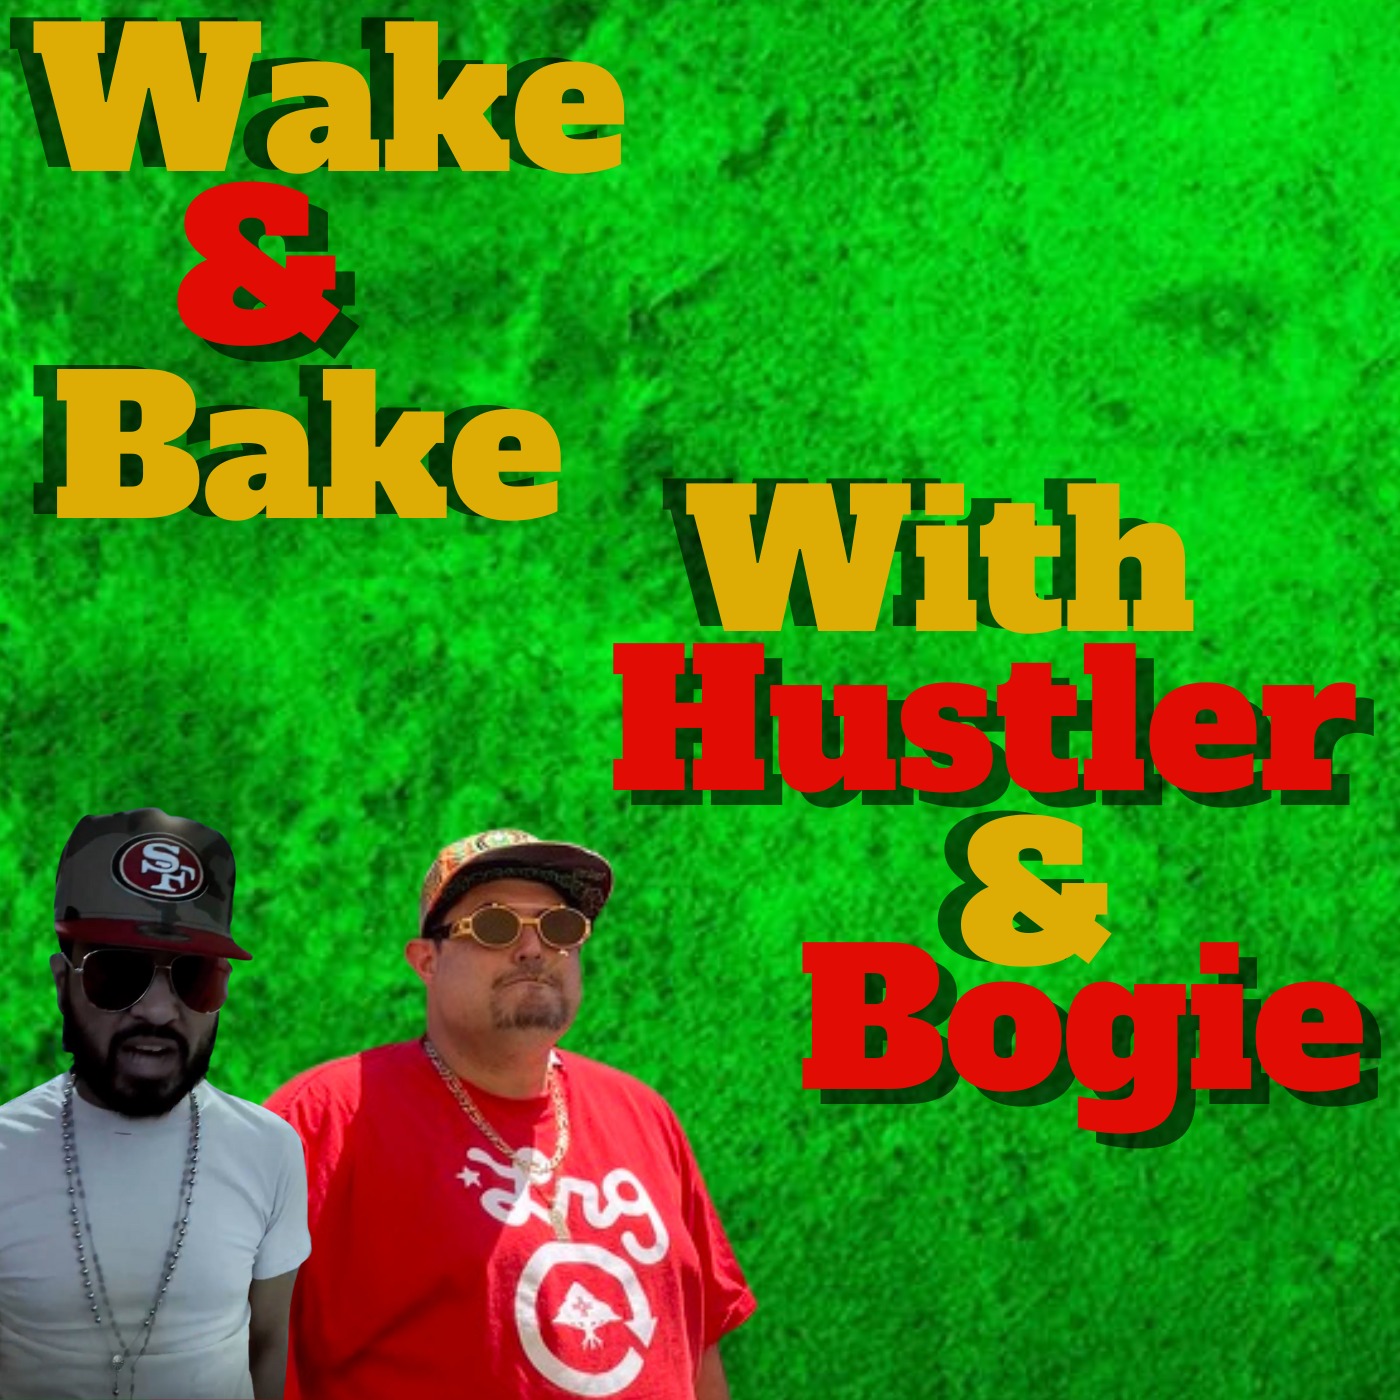 Wake & Bake with Hustler & Bogie | Tuesday August 23rd 2022